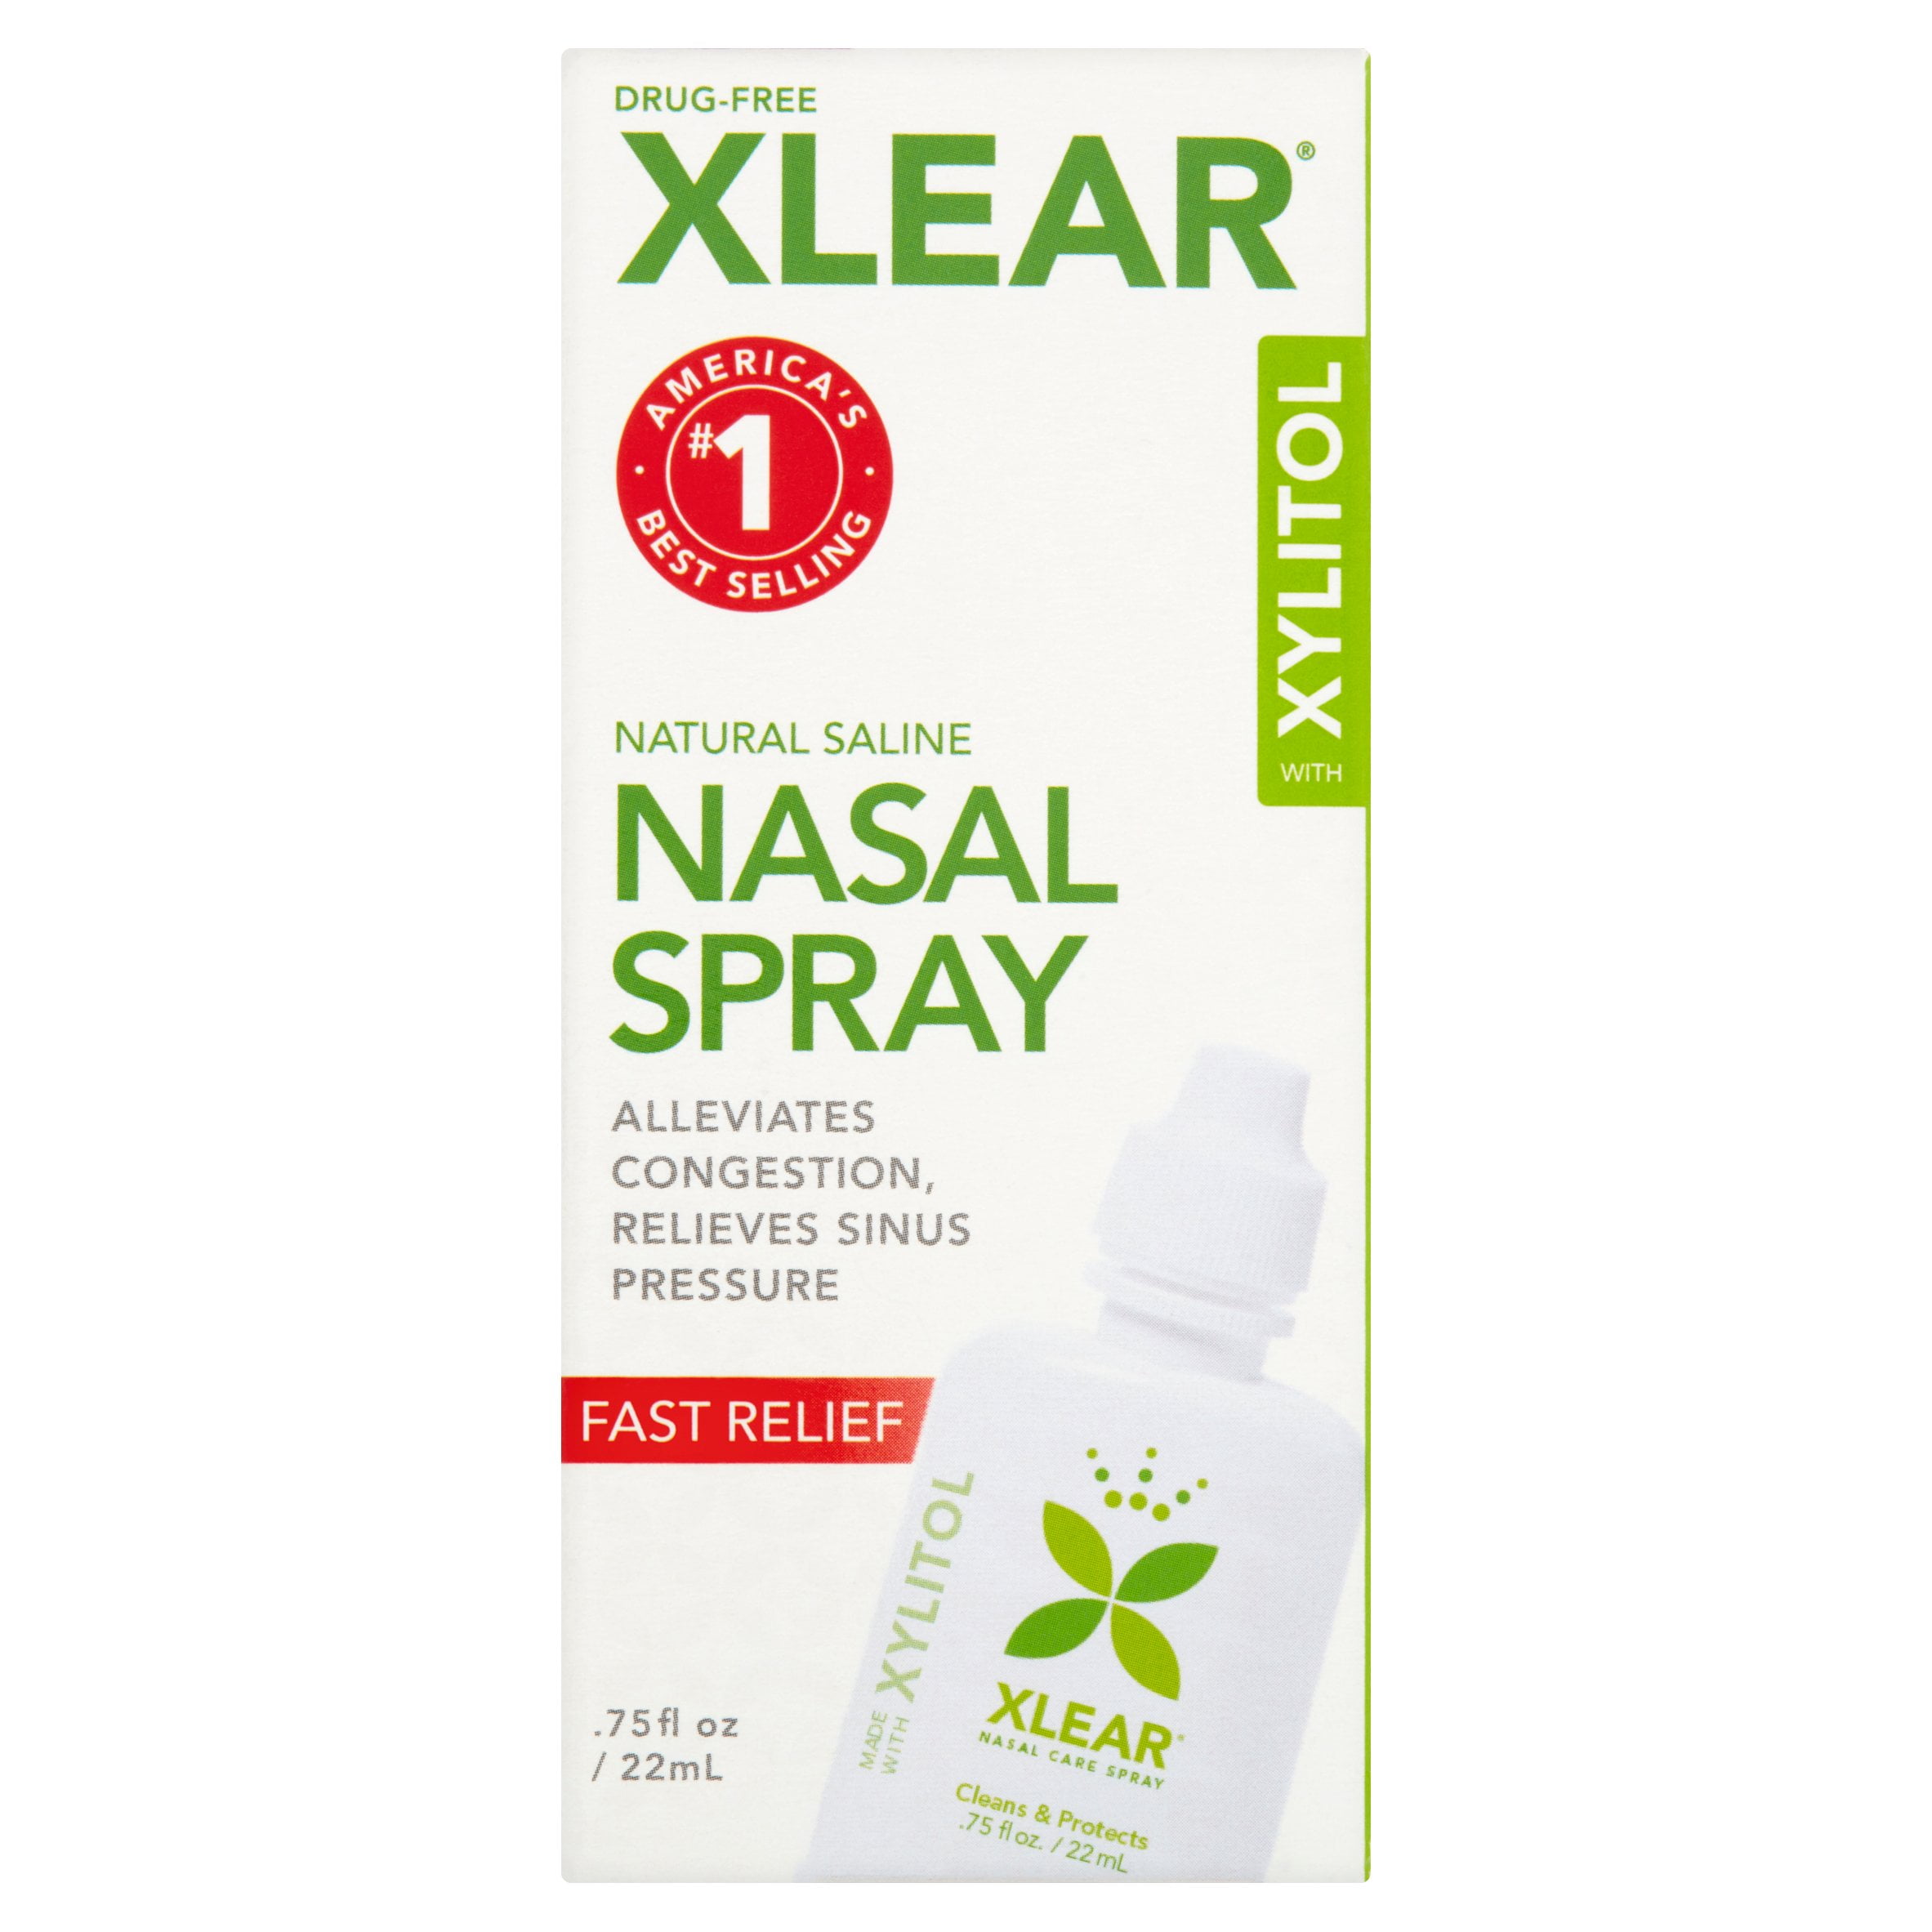 2 Pack Xlear Natural Saline Nasal Spray 75 Fl Oz Walmart Com Walmart Com